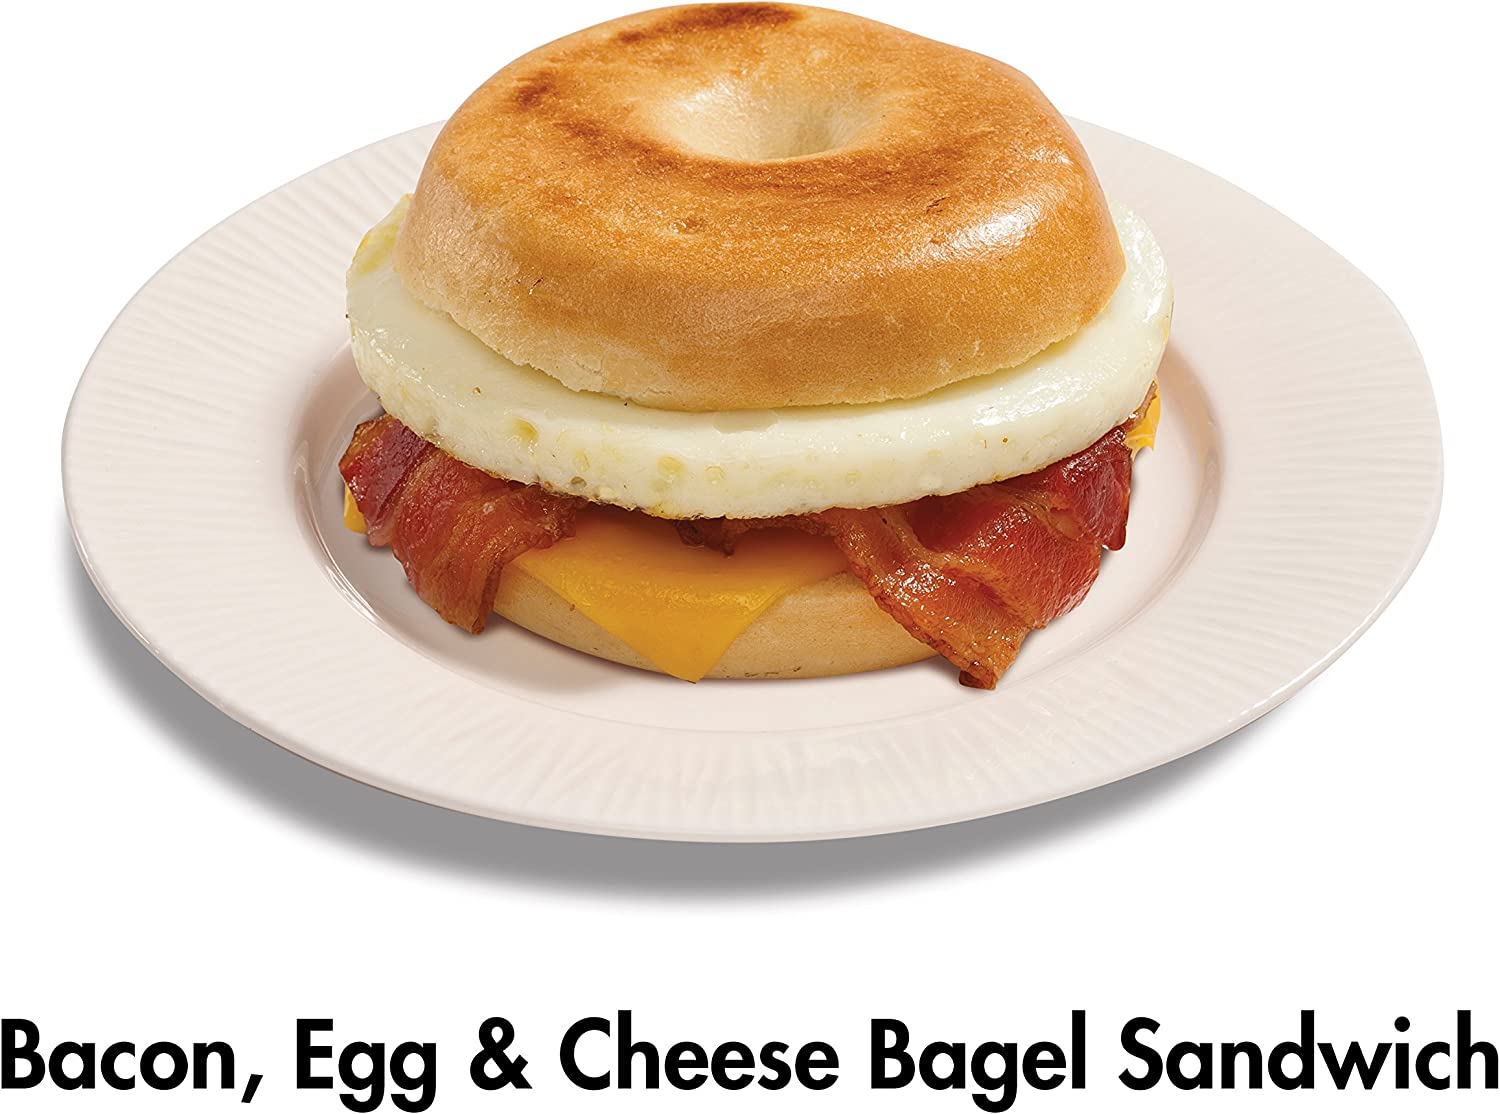 Hamilton Beach Breakfast Sandwich Maker with Egg Cooker Ring, Mini